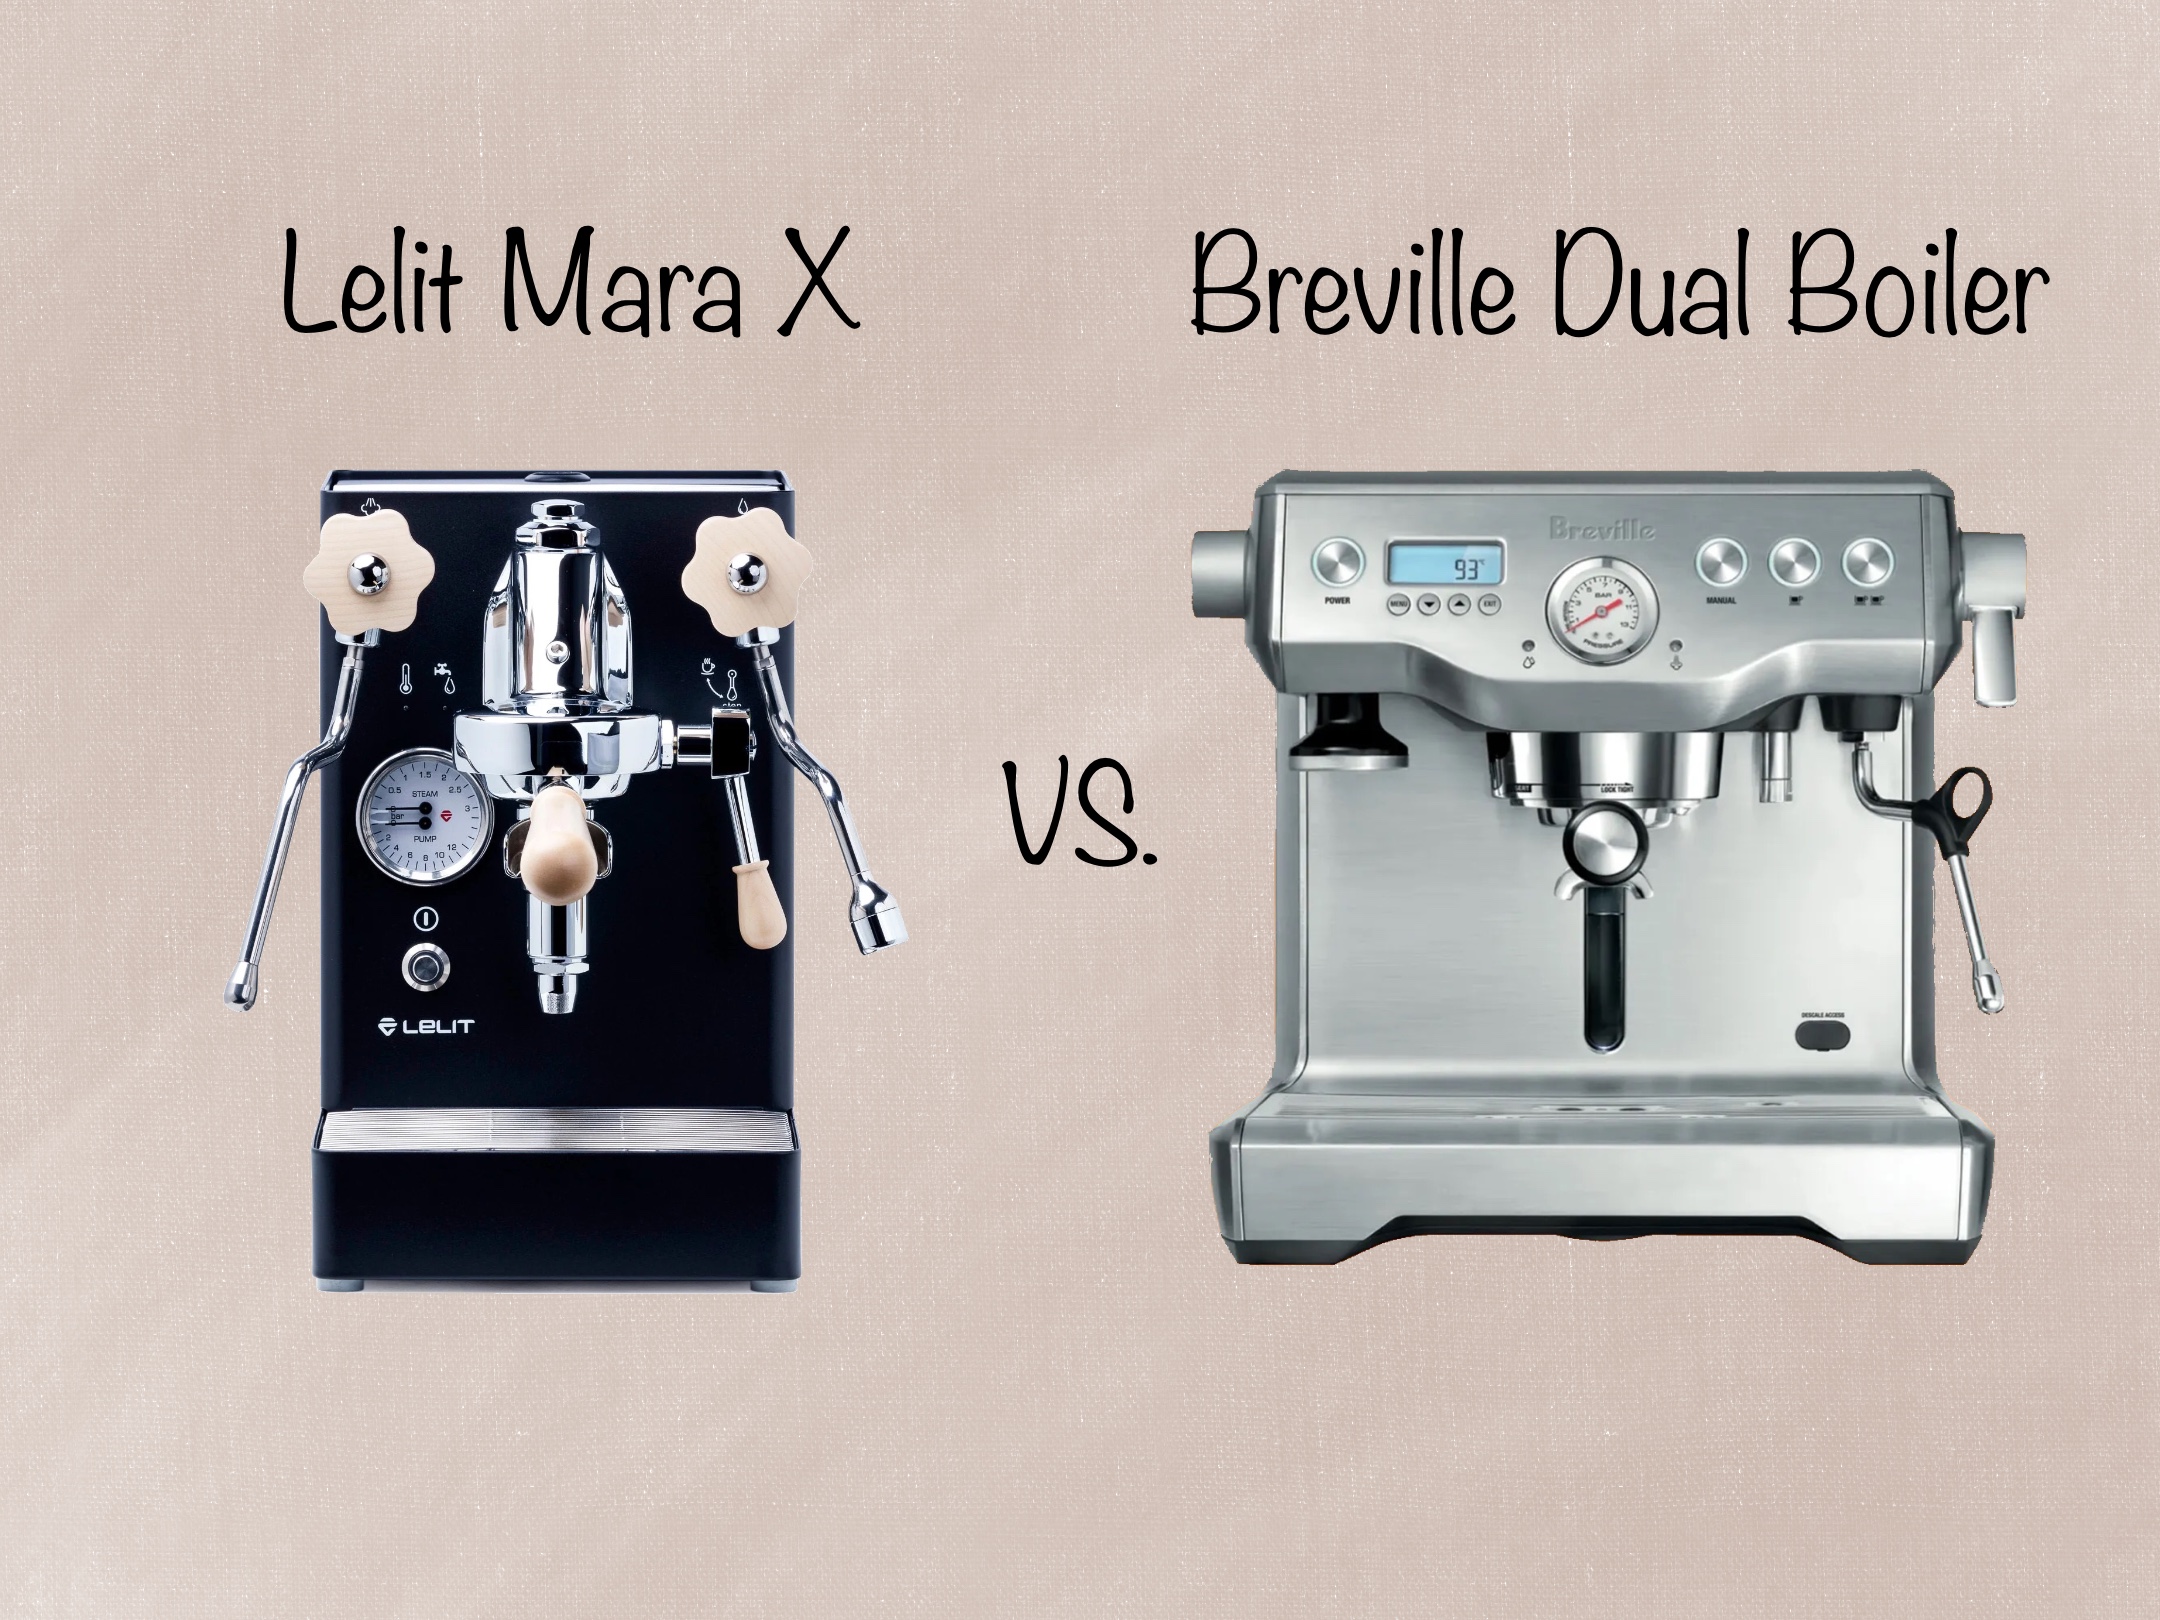 Lelit Mara X vs. Breille Dual Boiler